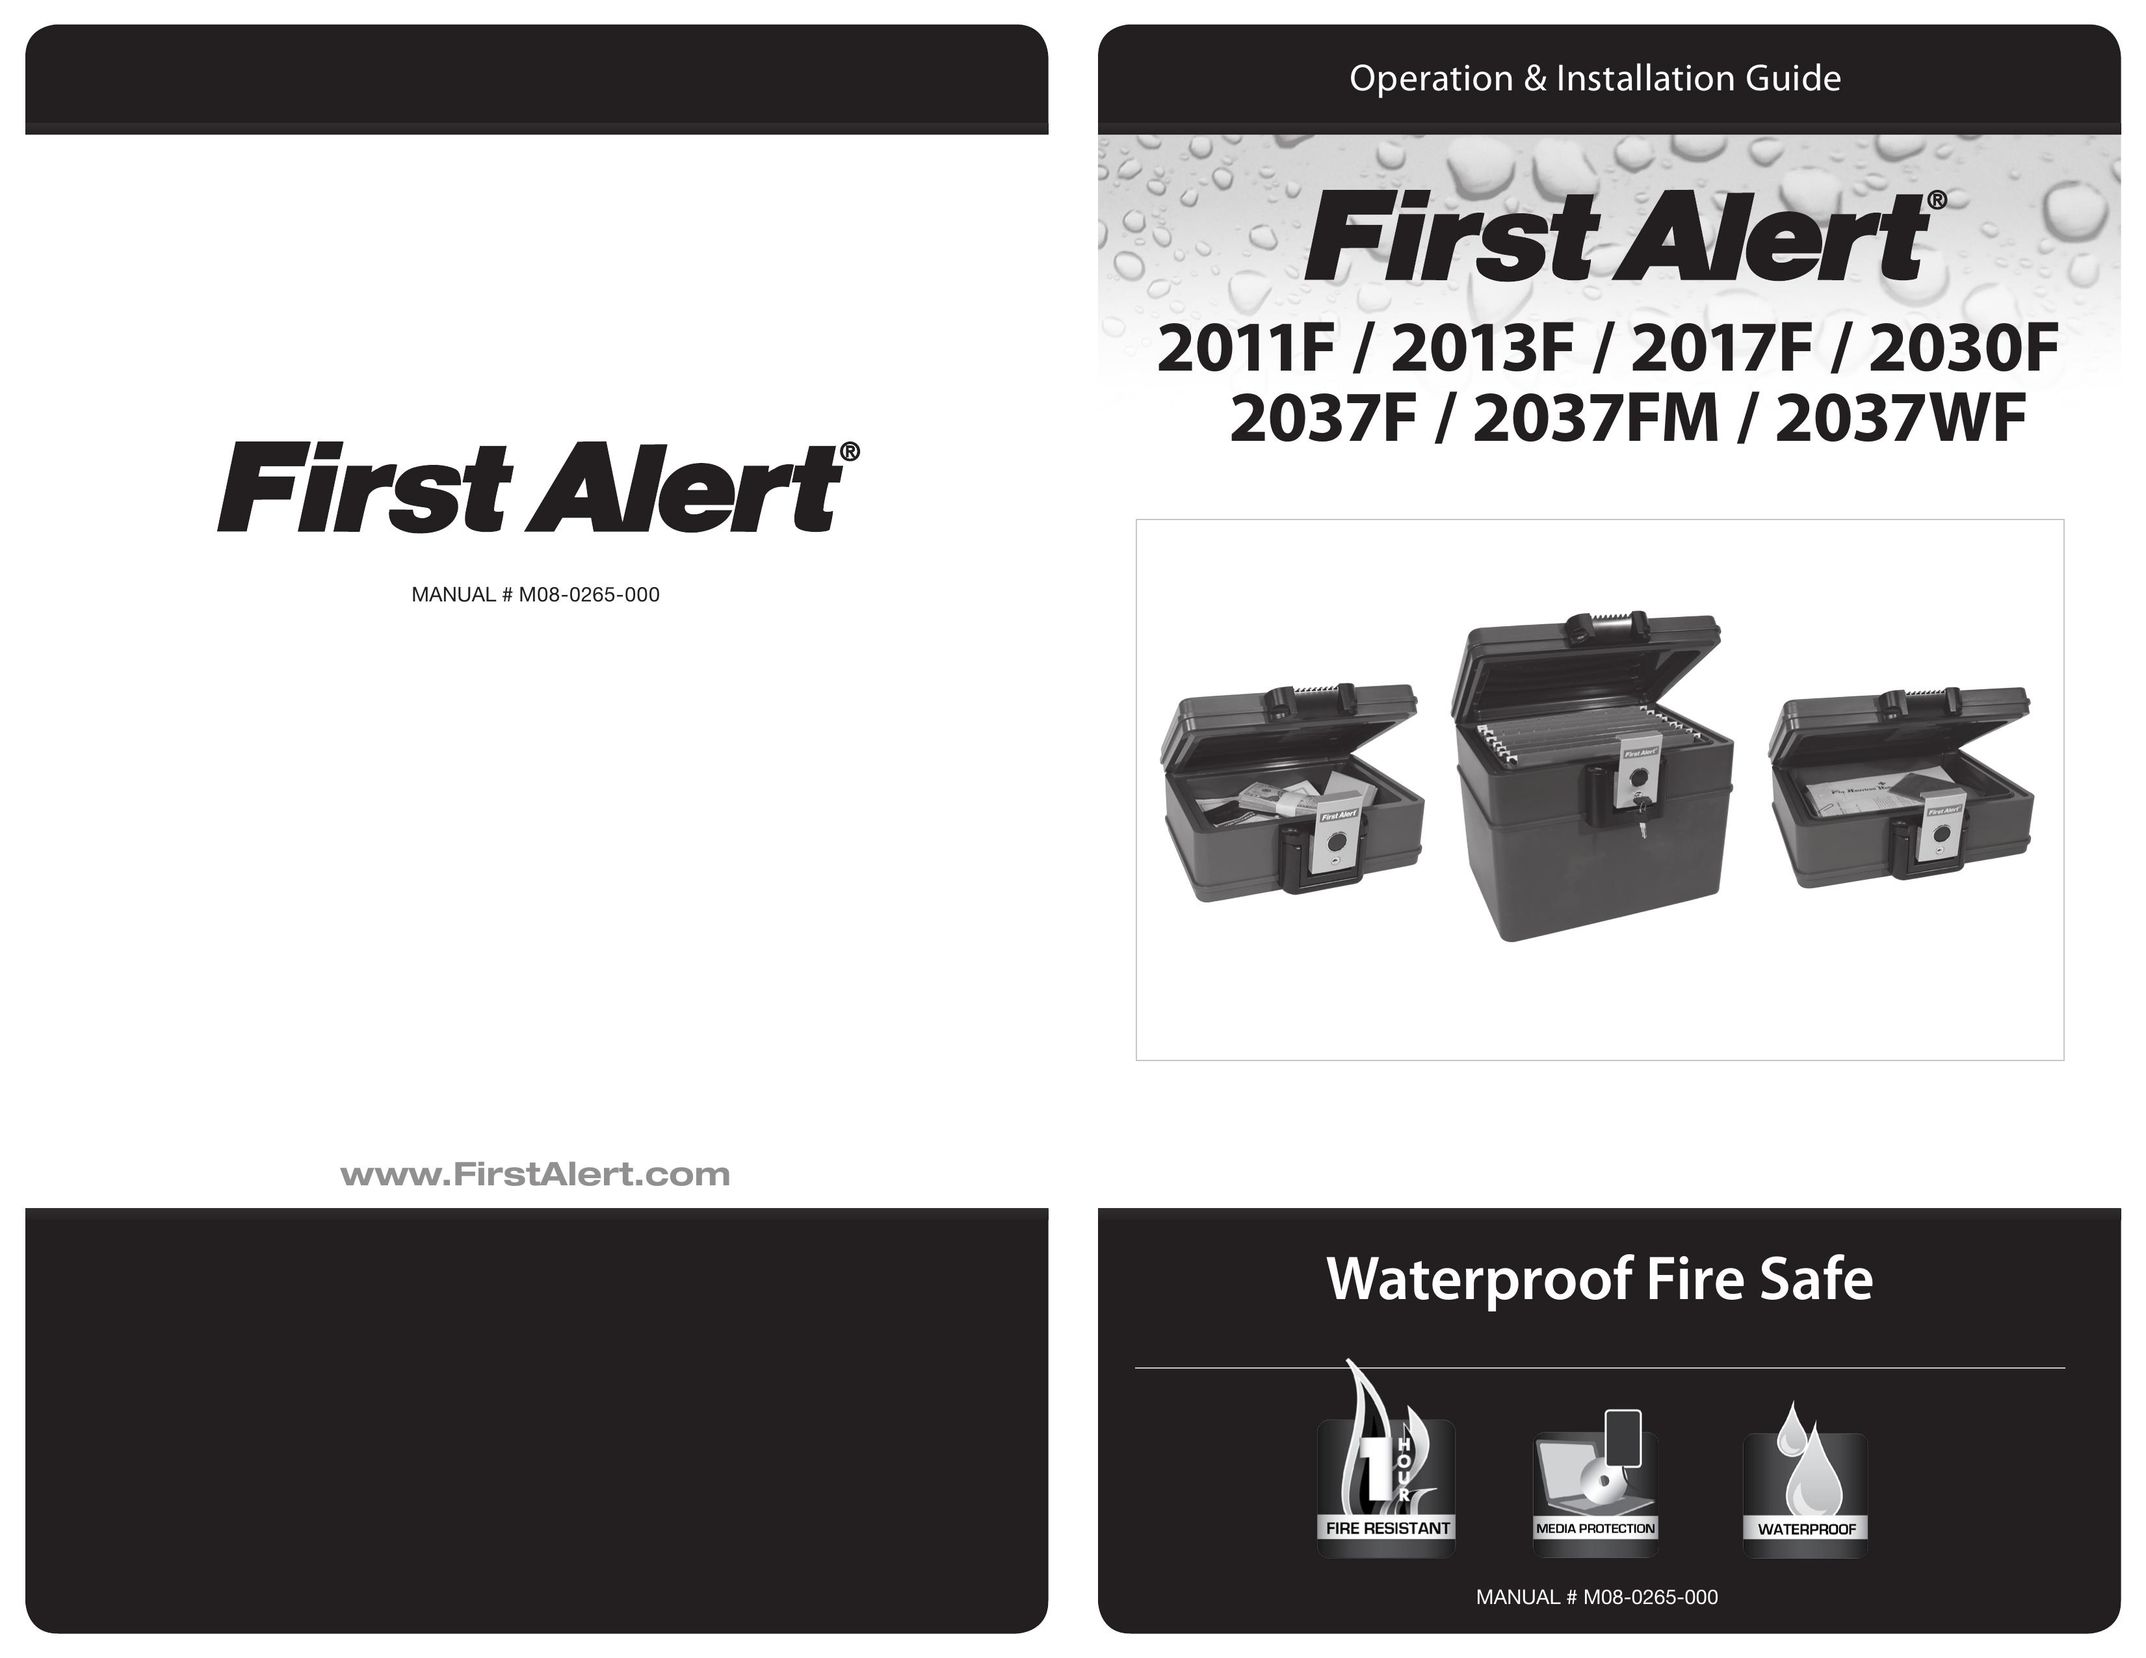 First Alert 2017F Portable Media Storage User Manual